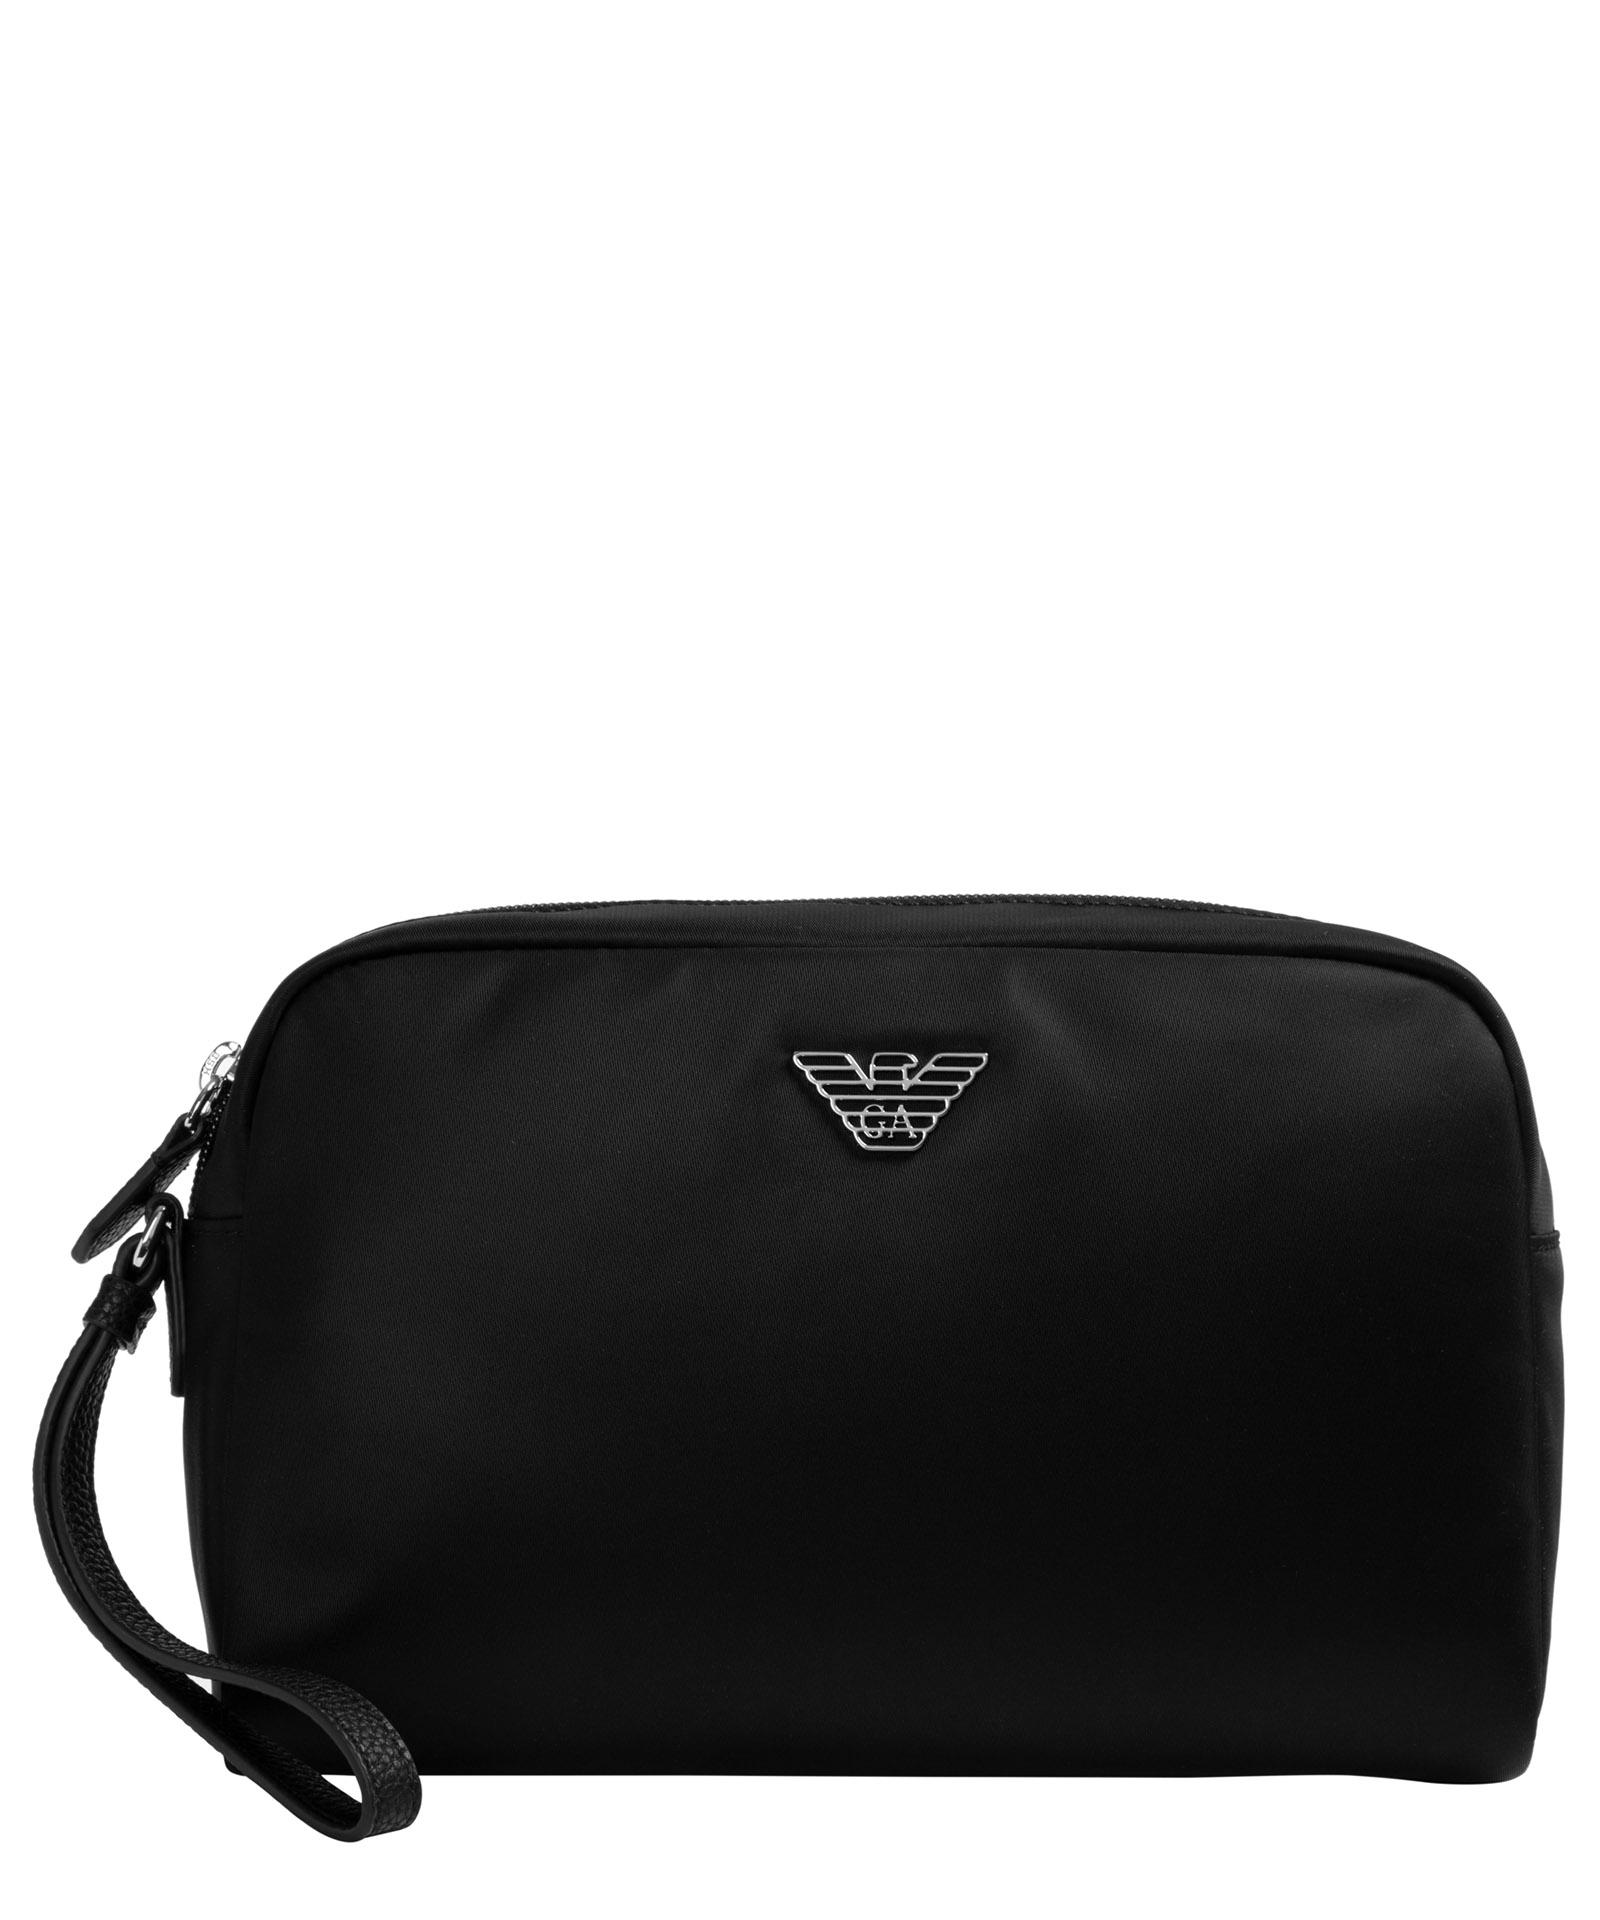 Emporio Armani Toiletry Bag in Black | Lyst